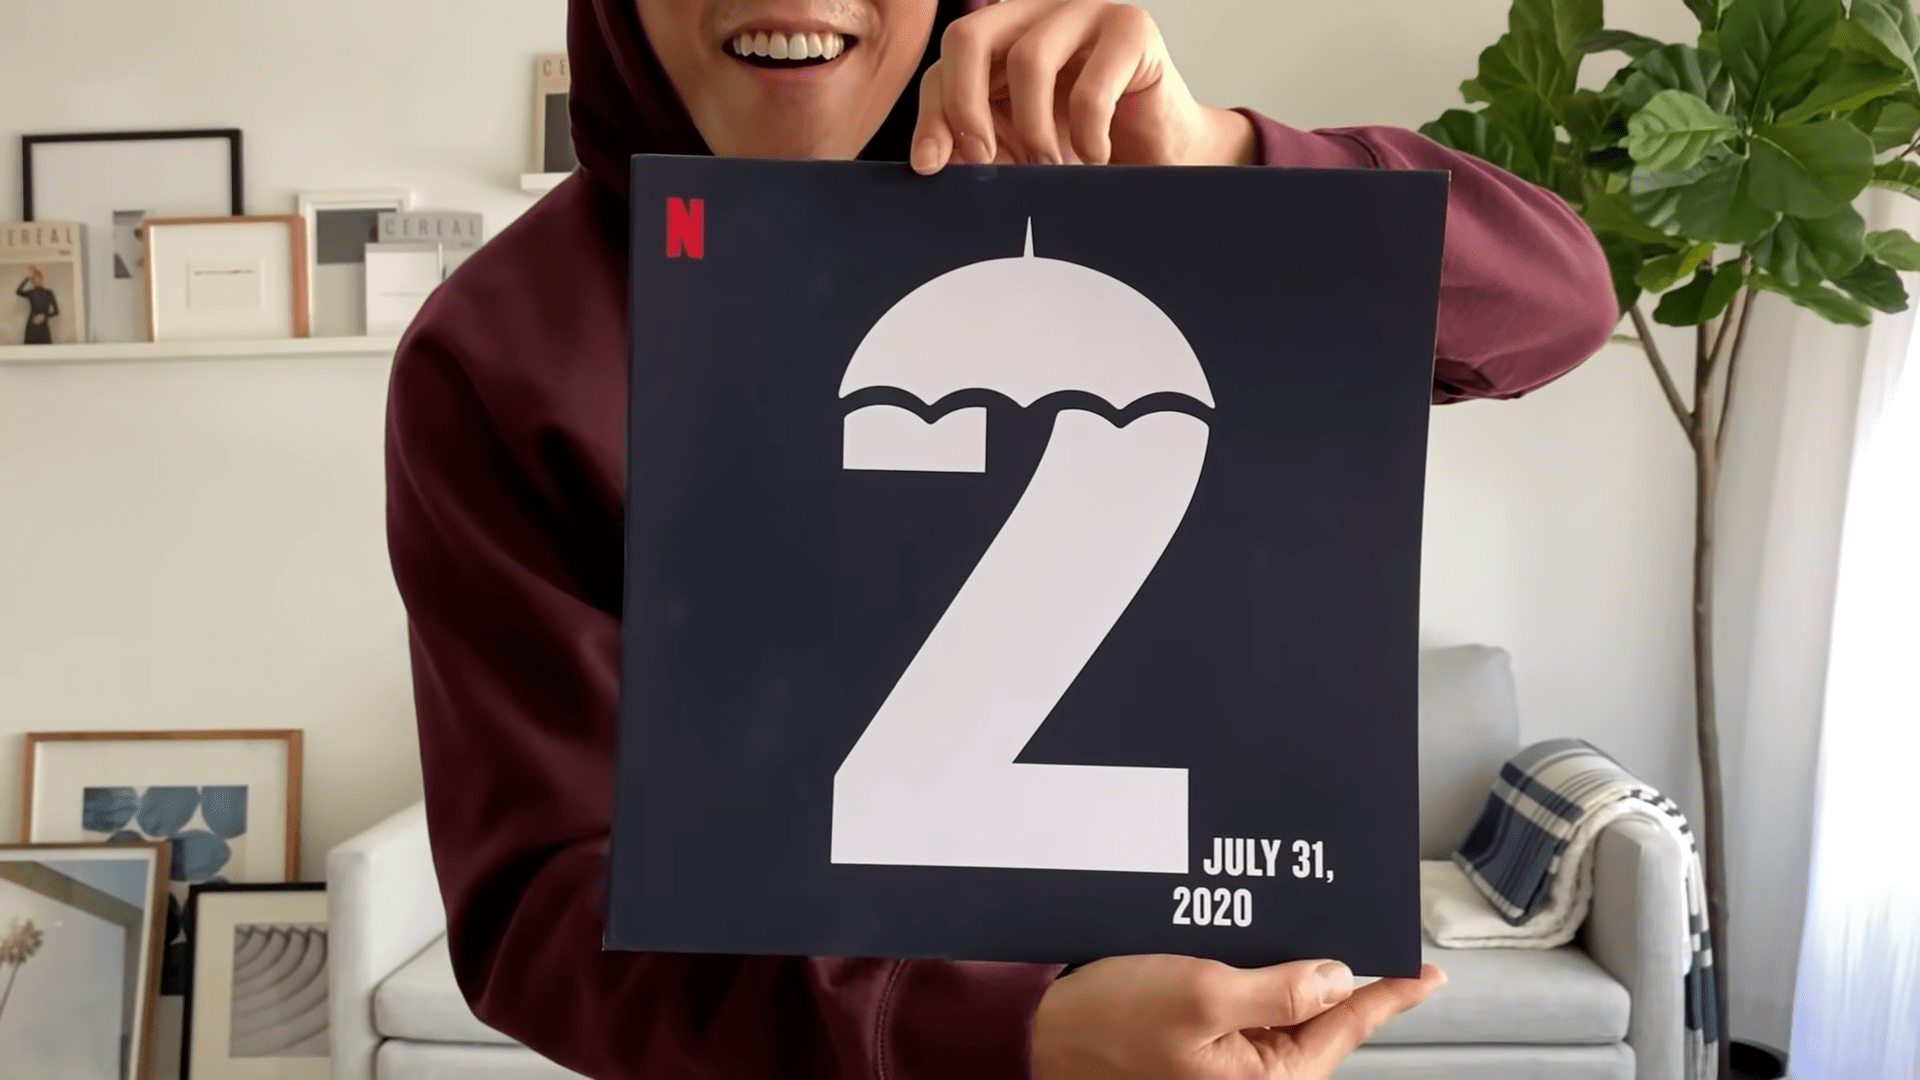 The Umbrella Academy: Season 2 [TRAILER] Coming to Netflix July 31, 2020 1